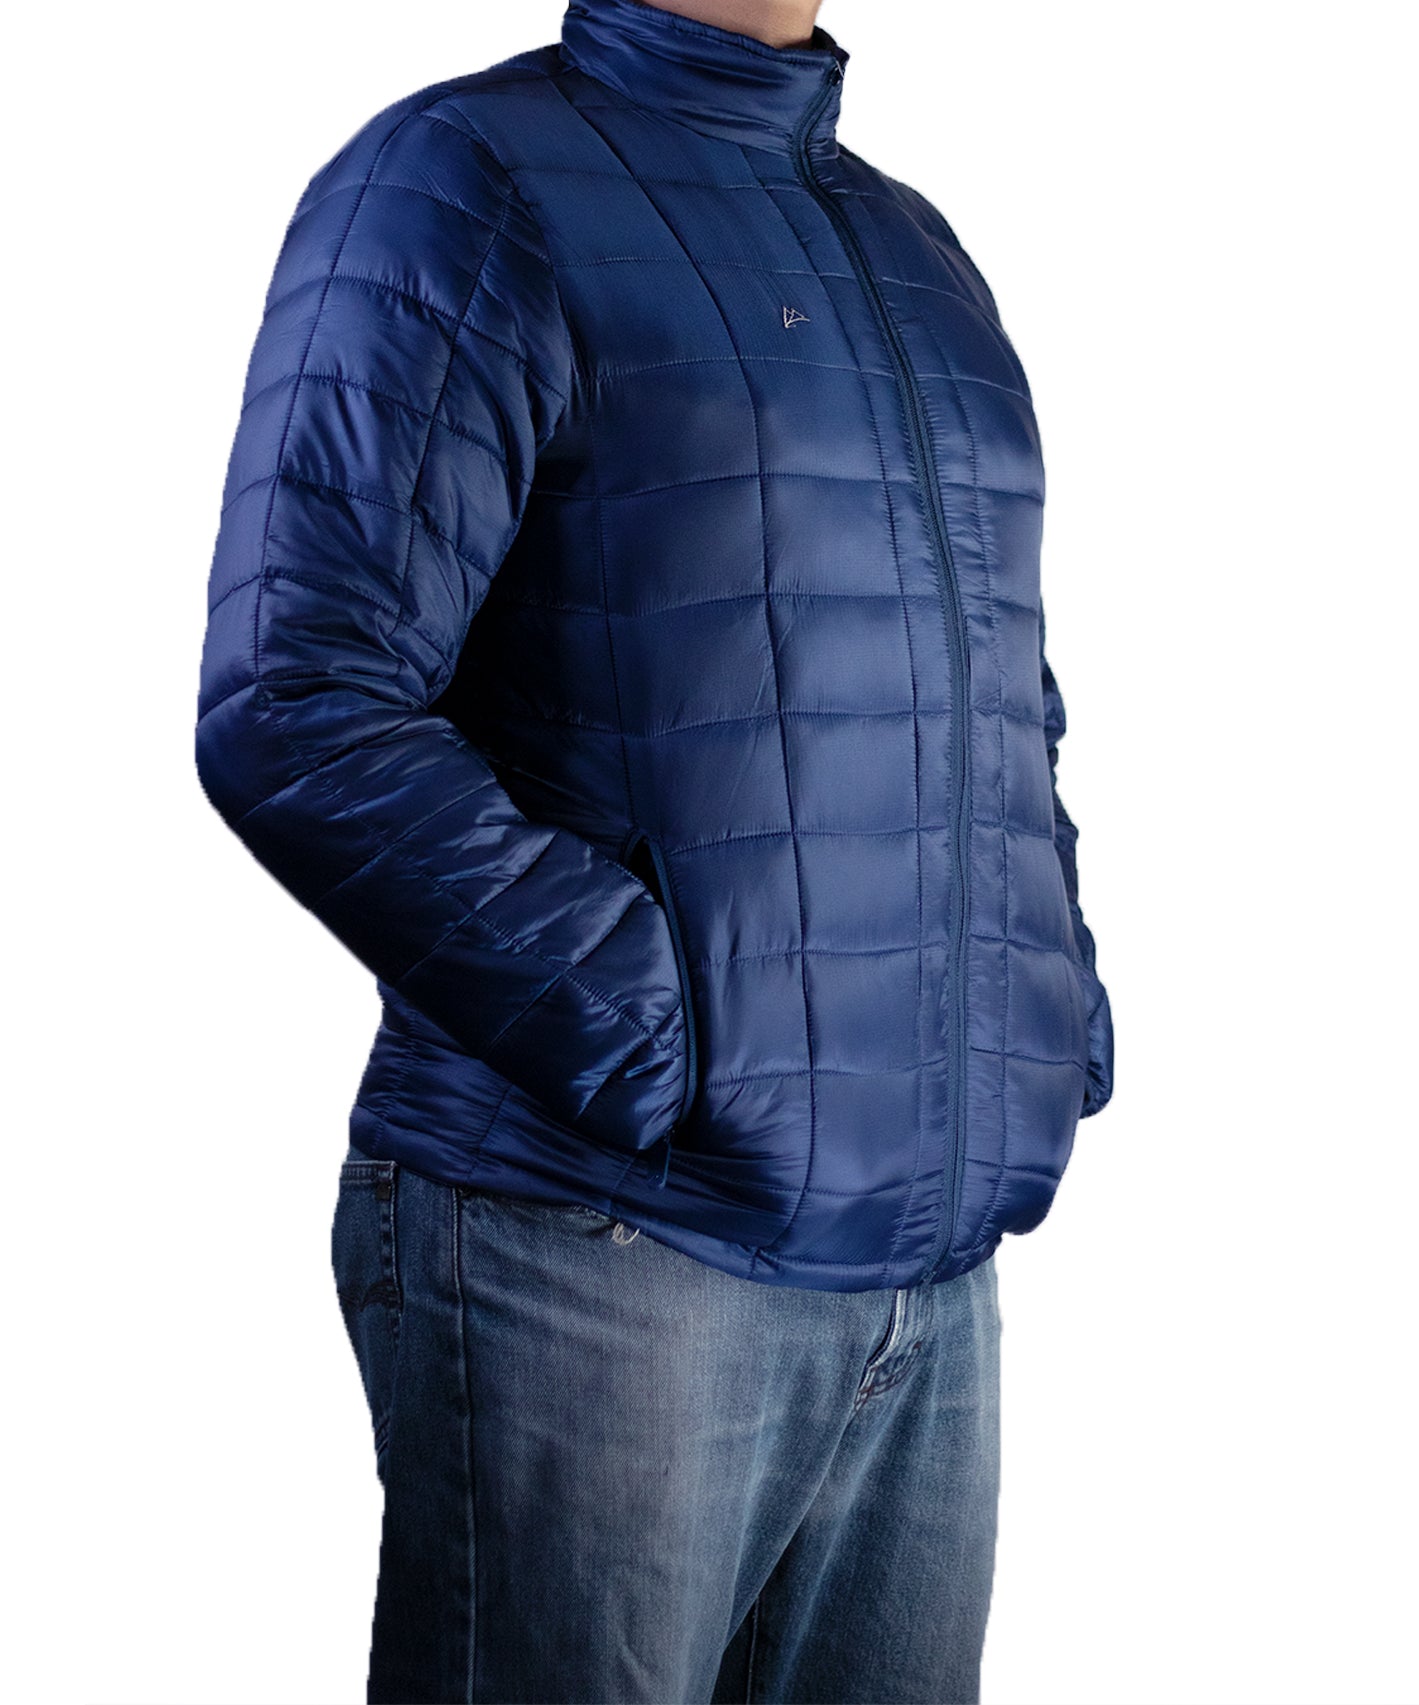 Men's navy nylon jacket JK0419-1